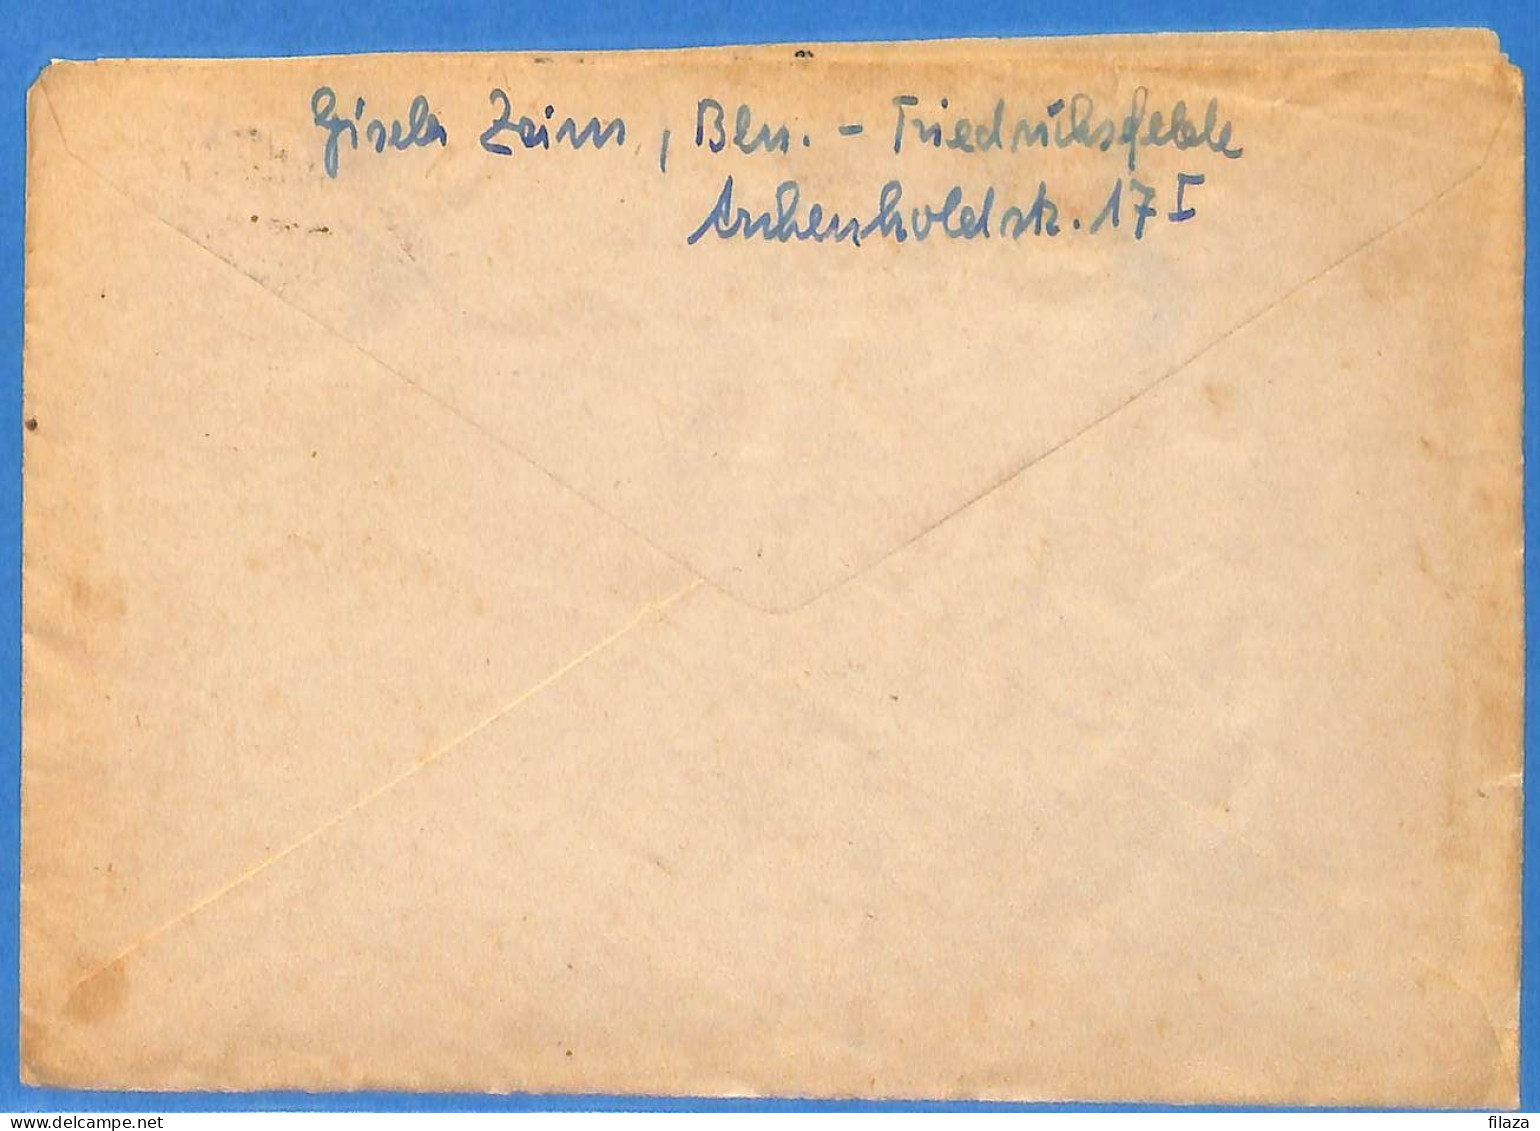 Berlin West 1952 - Lettre De Berlin - G33060 - Briefe U. Dokumente